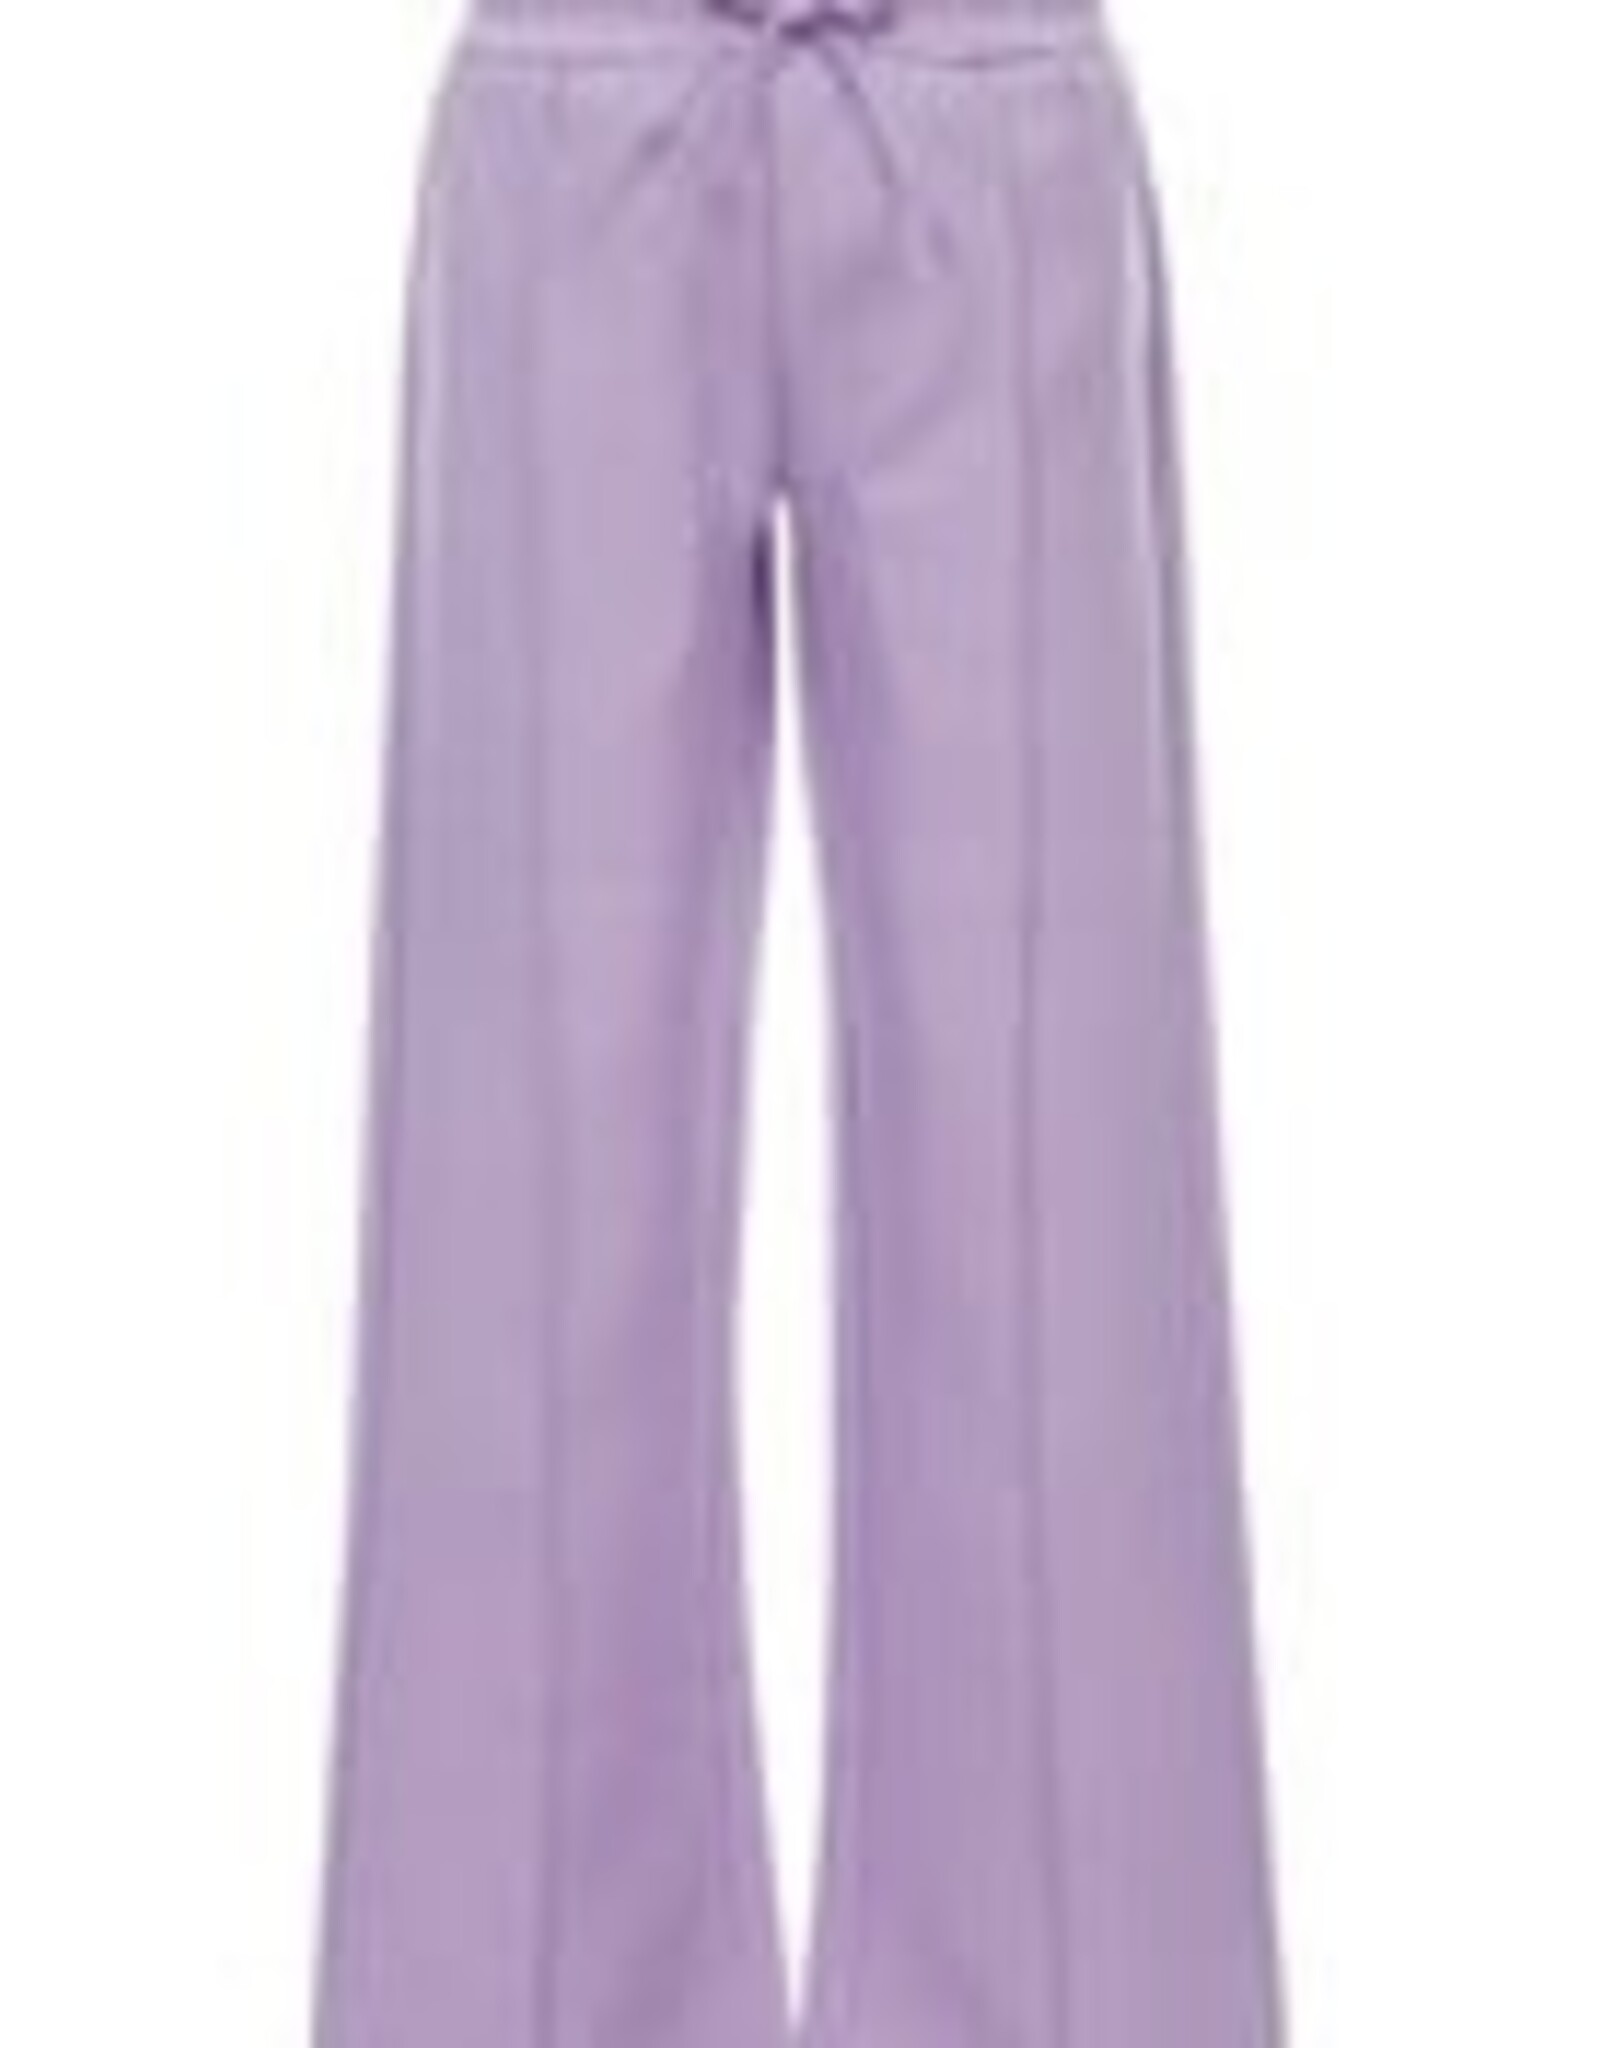 LOOXS 10sixteen pants 10Sixteen pants pale purple